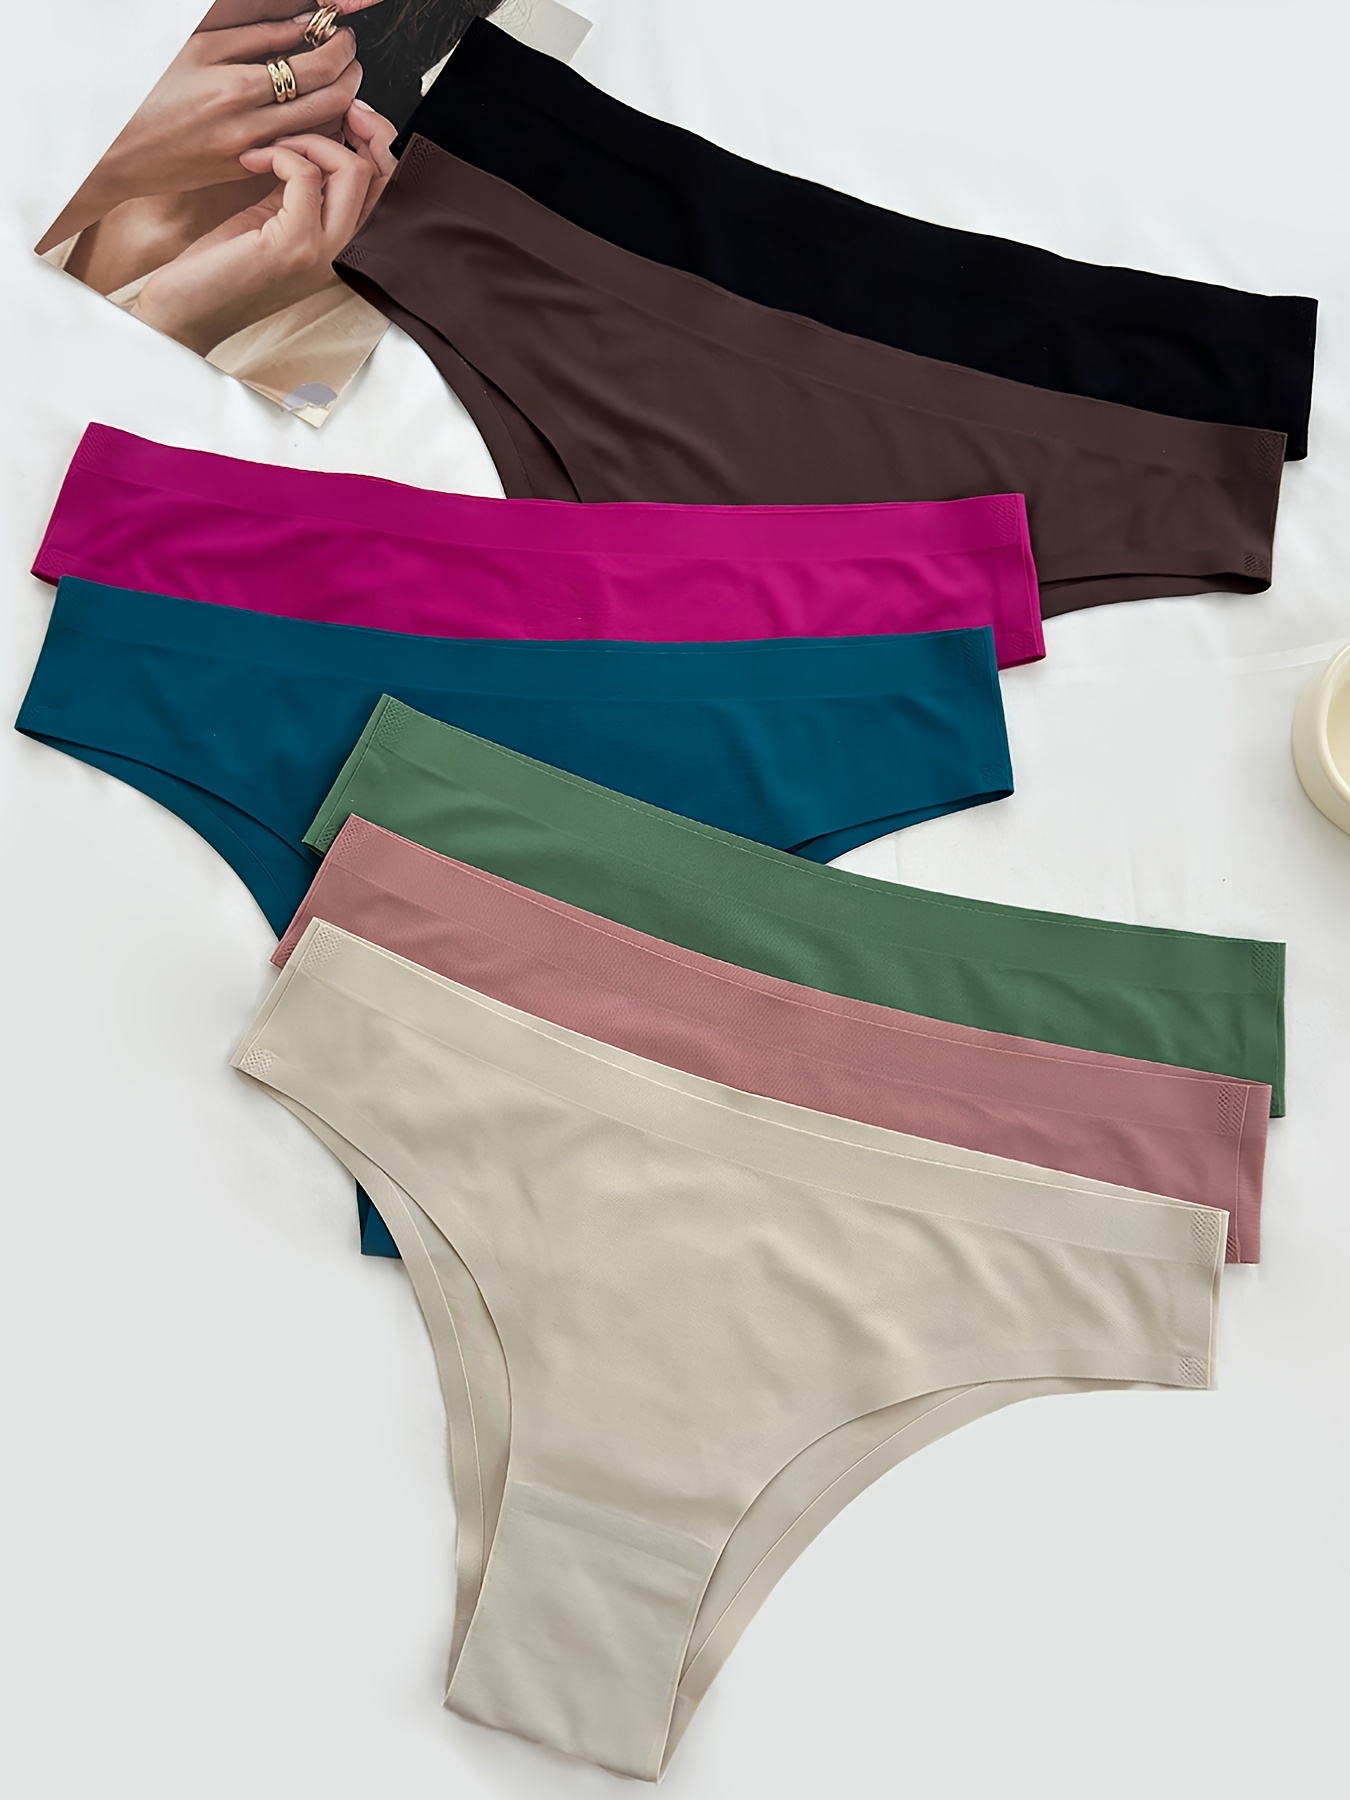 Hipster Underwear 7-Pack for Girls